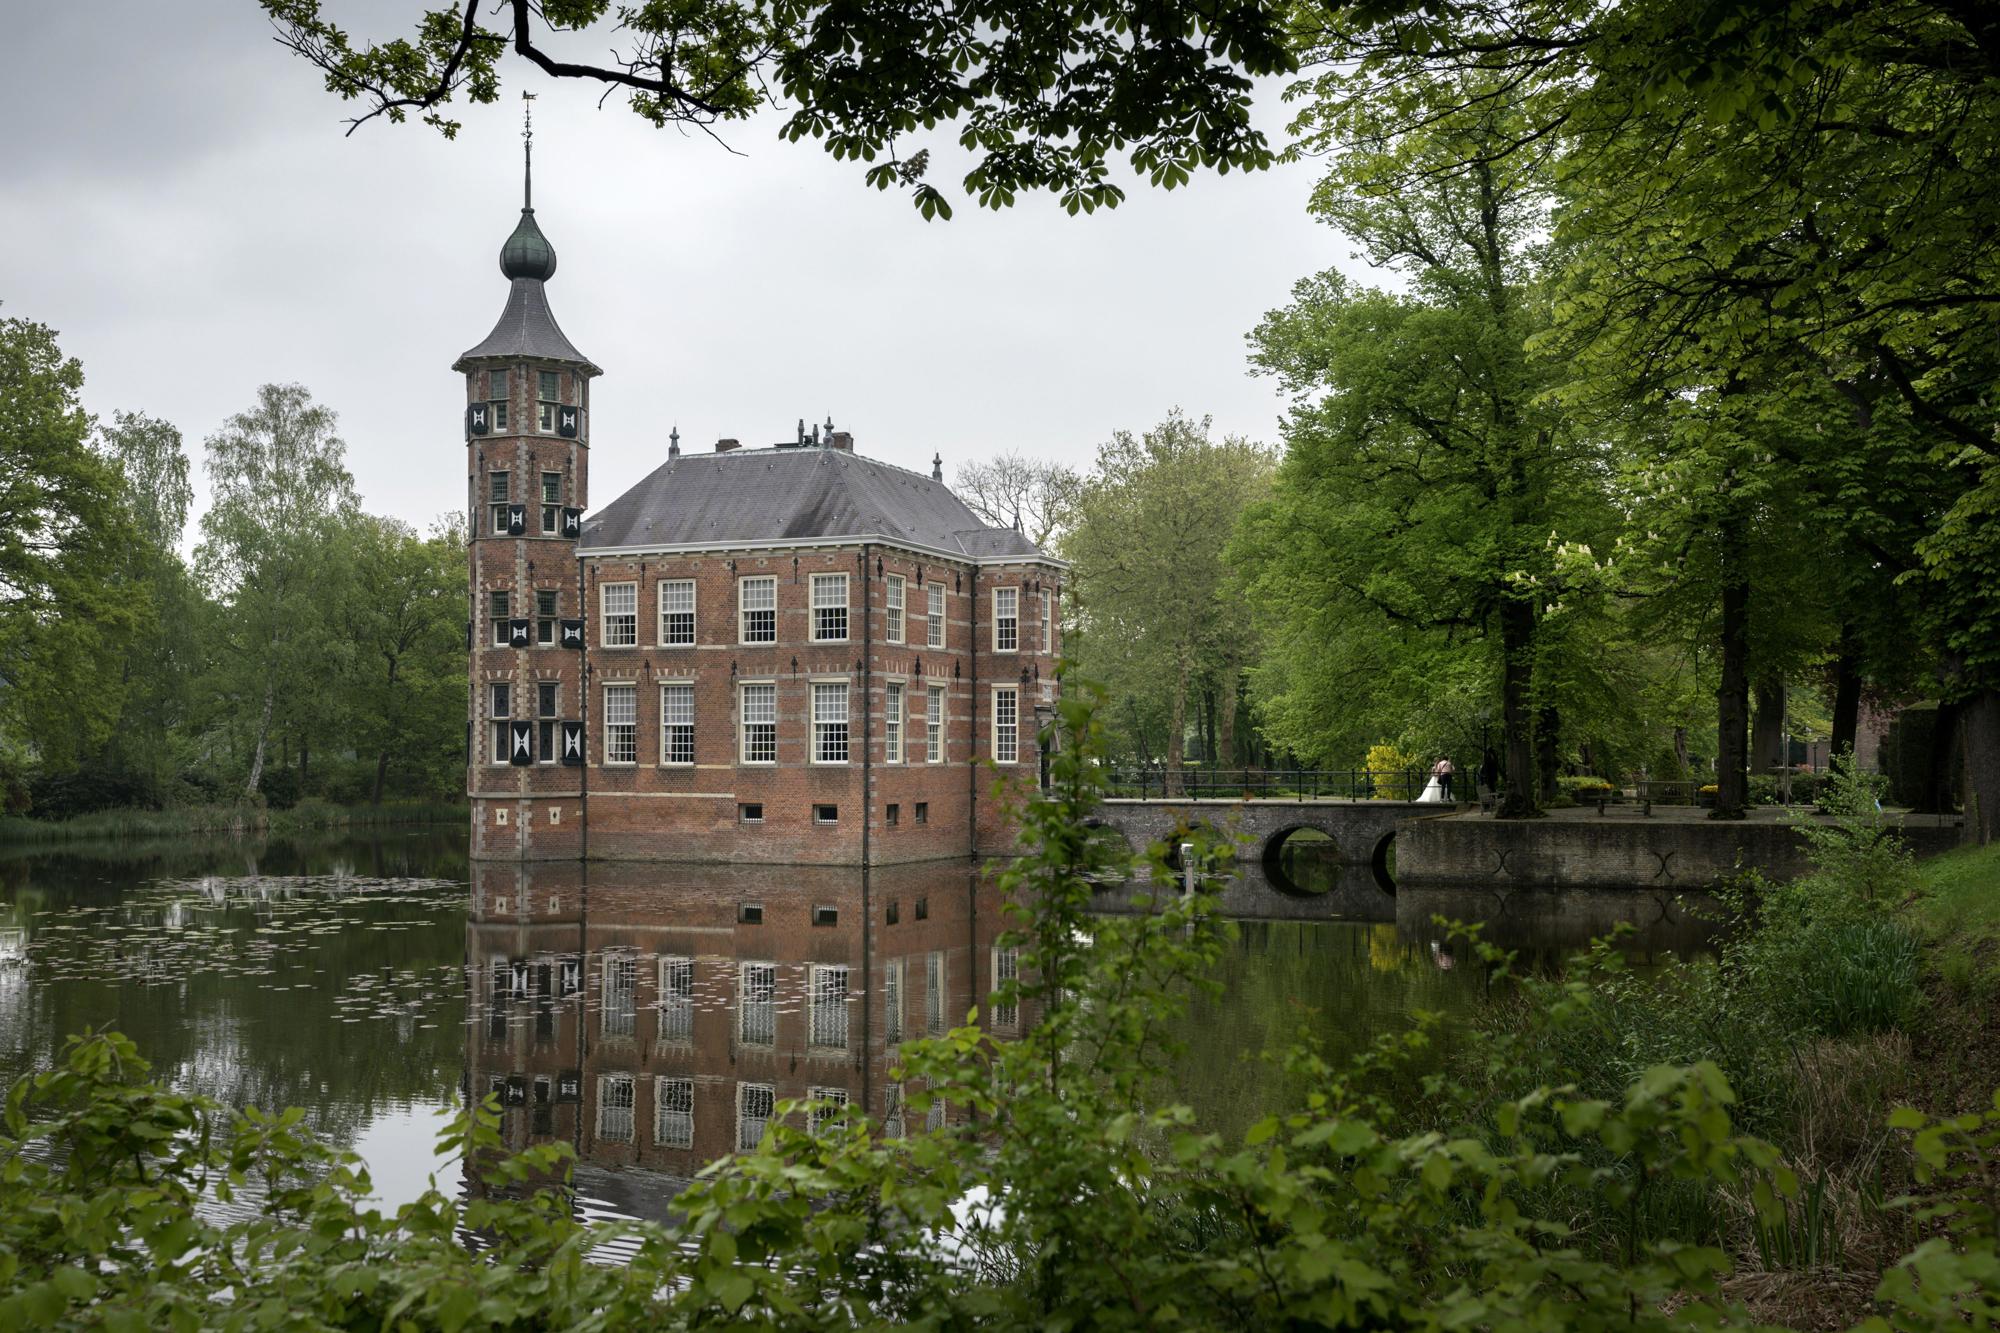 Breda: The hospitable green city